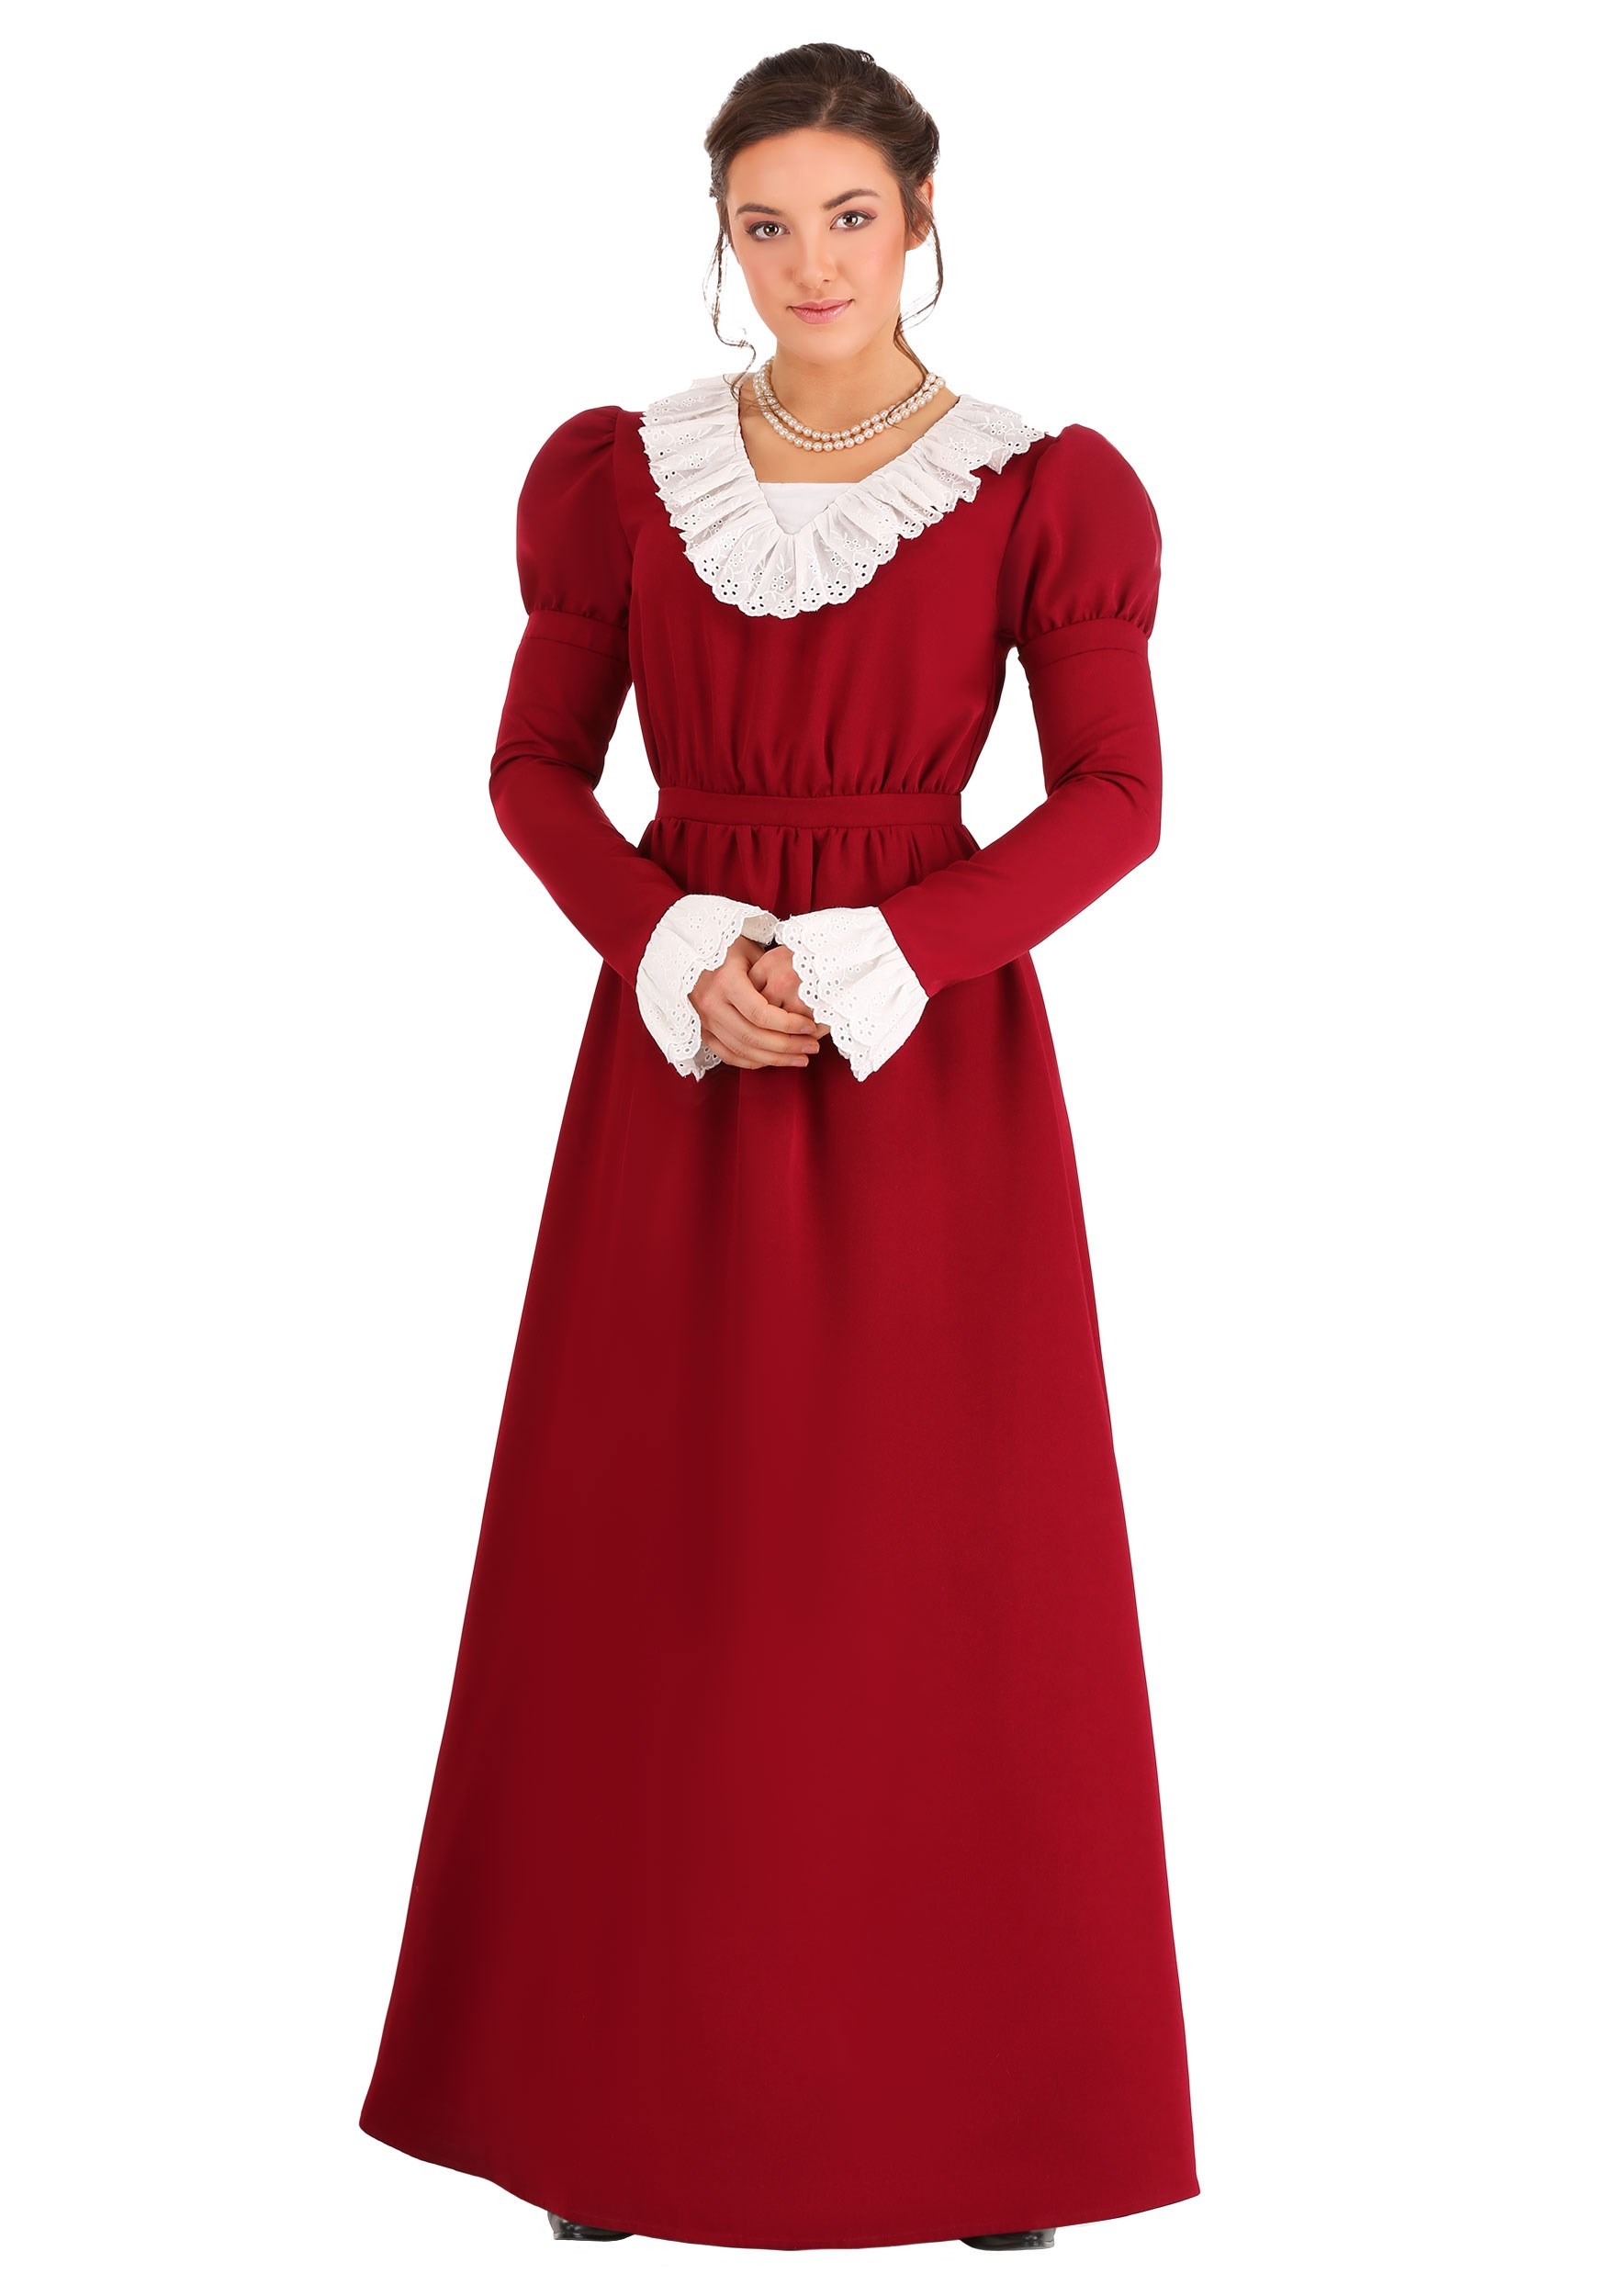 Abigail Adams Womens Costume | Adult Historical Costumes